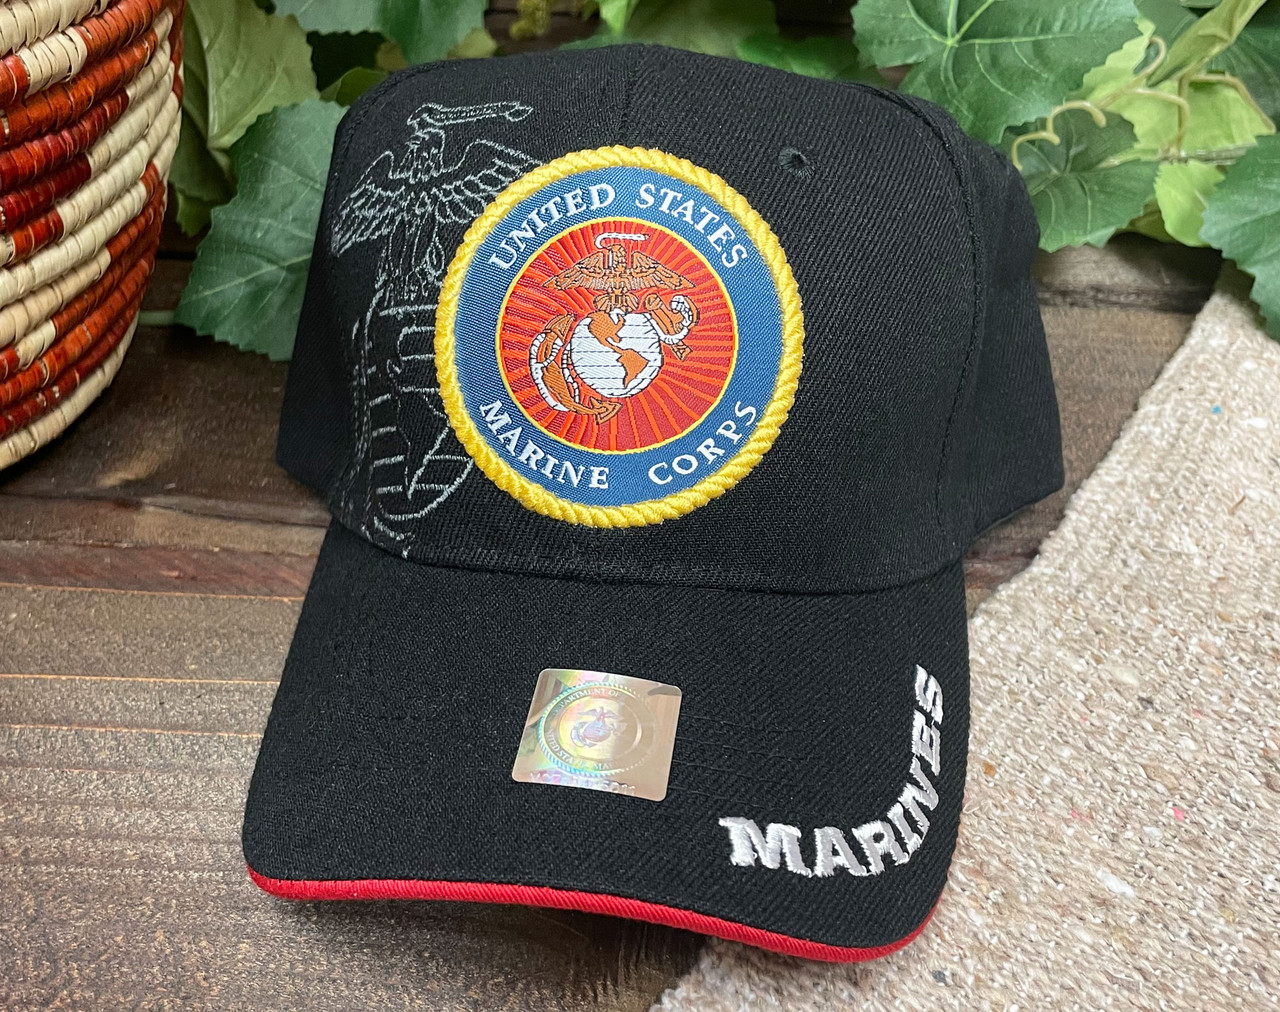 US Marine Corps Baseball Cap (13bc291452) - Mission Del Rey Southwest